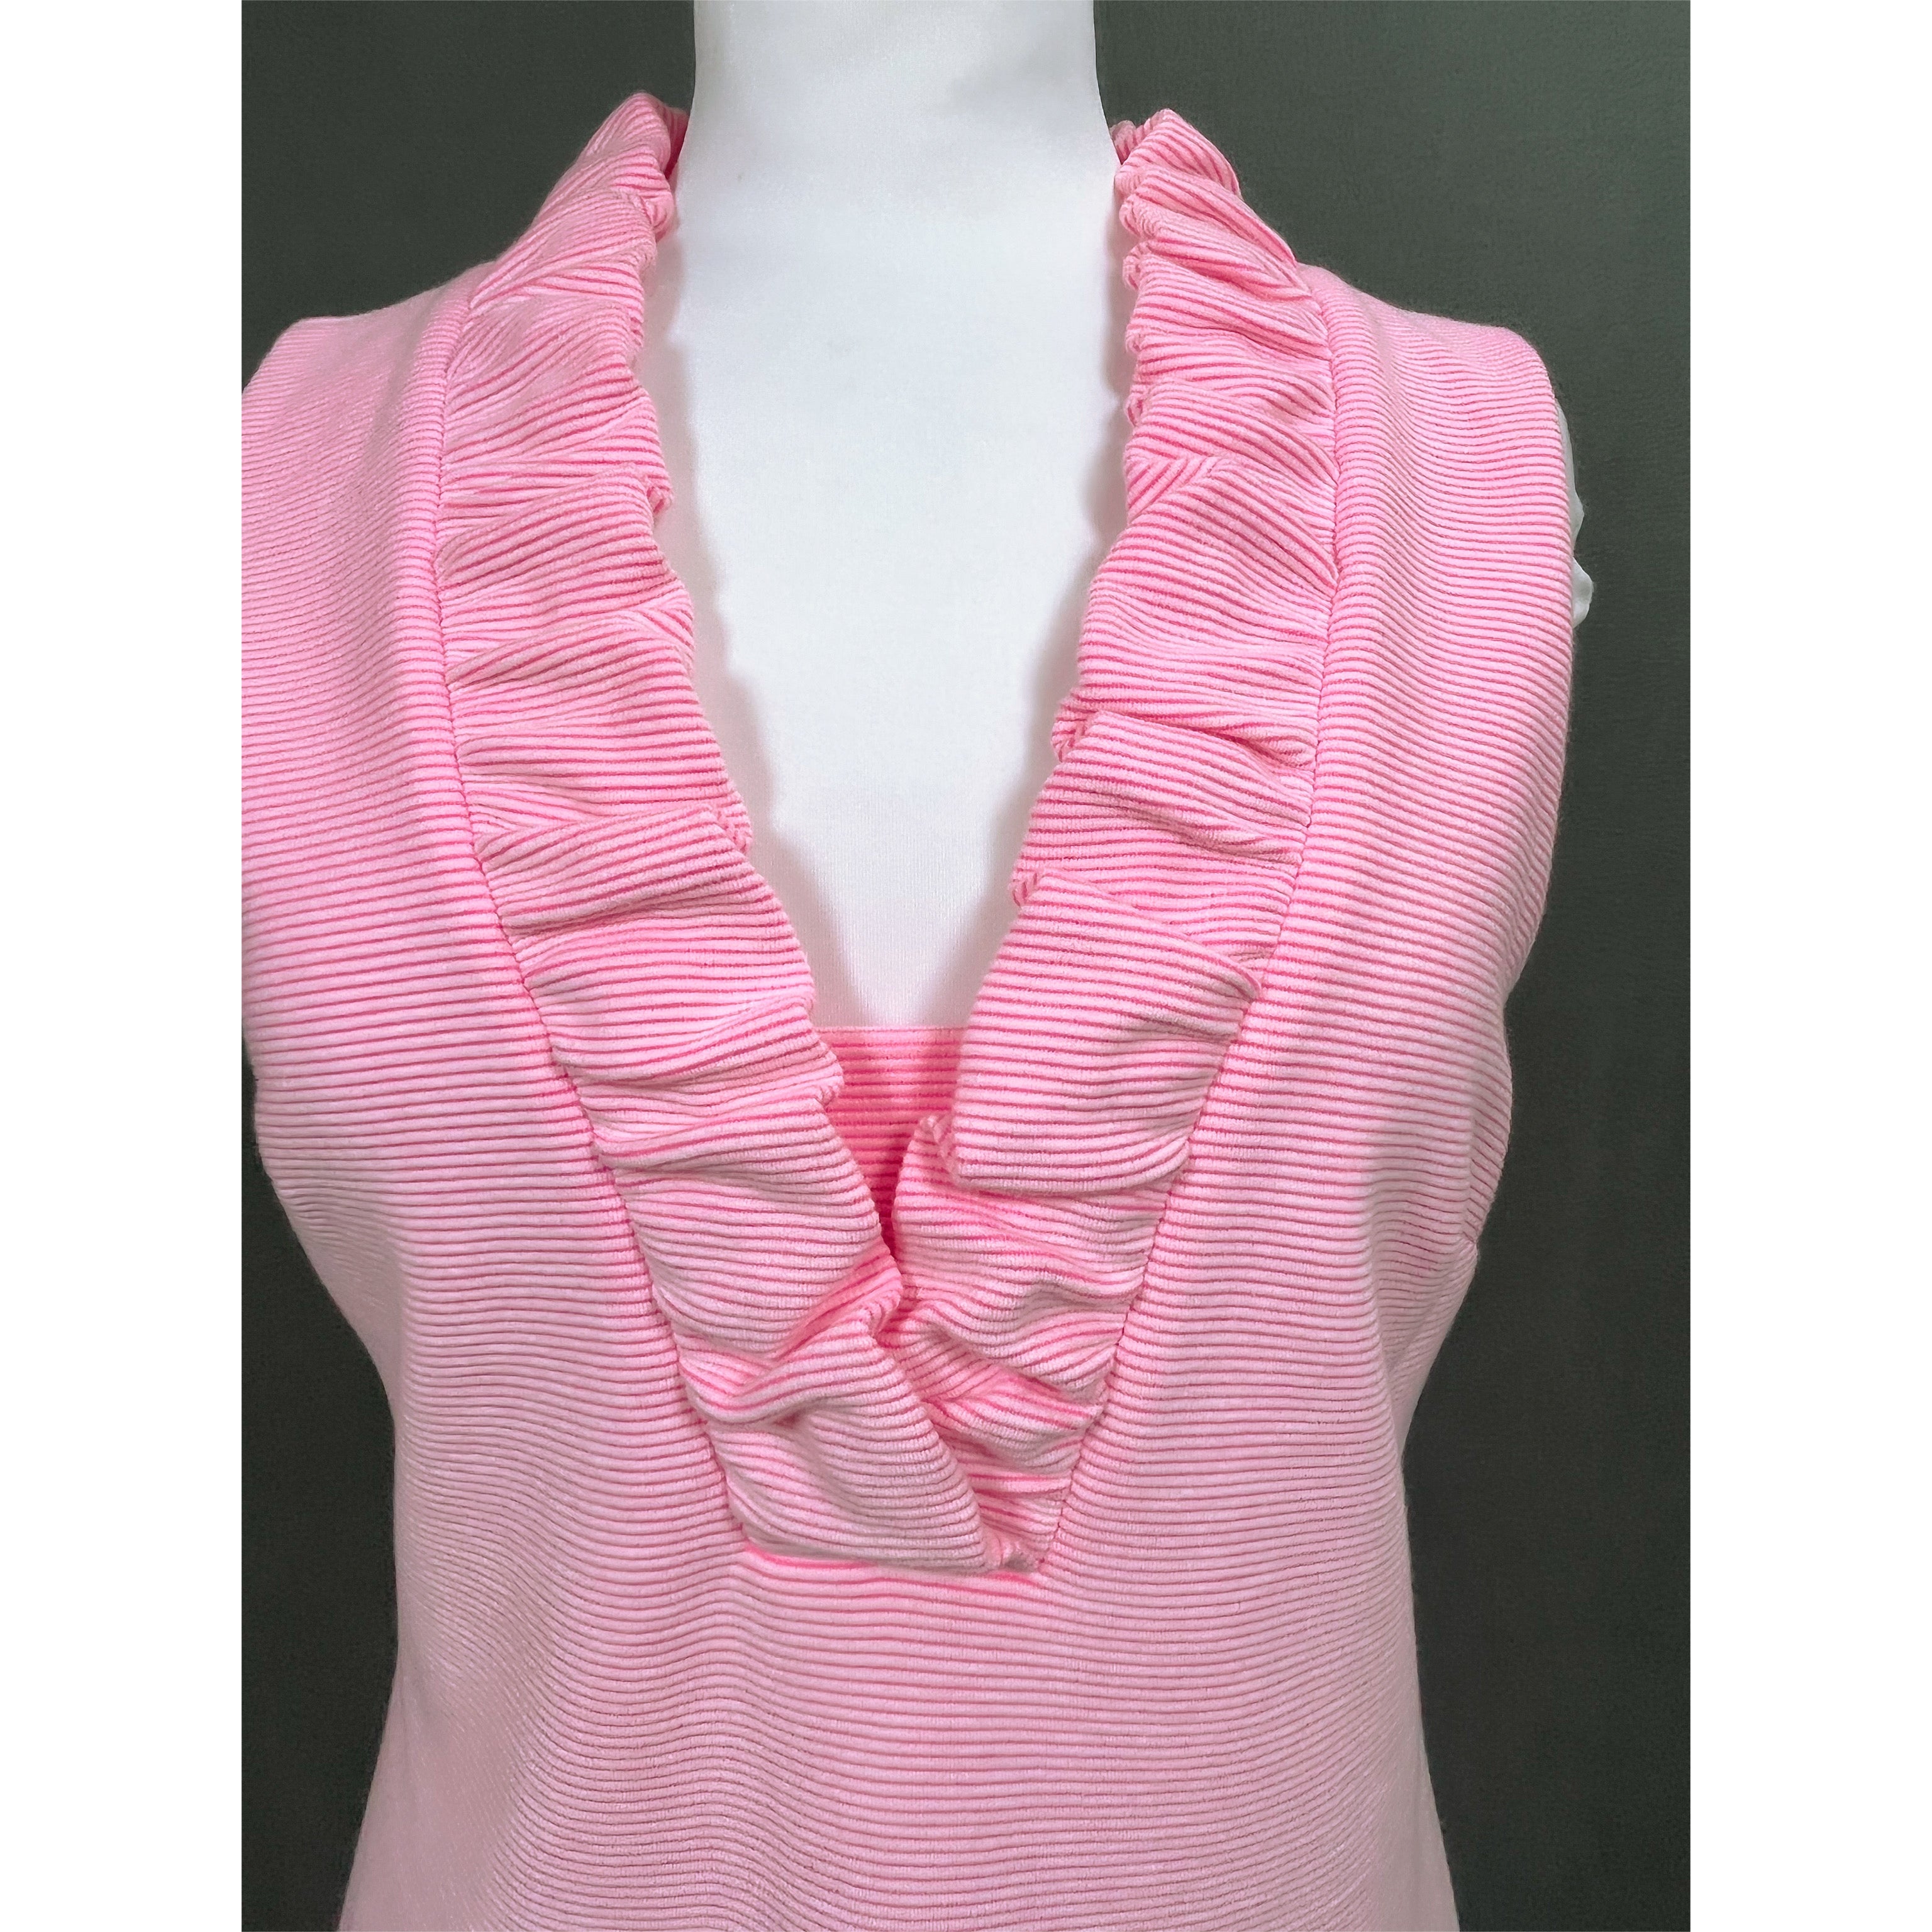 Lilly Pulitzer pink stripe Tisbury Shift dress, size M